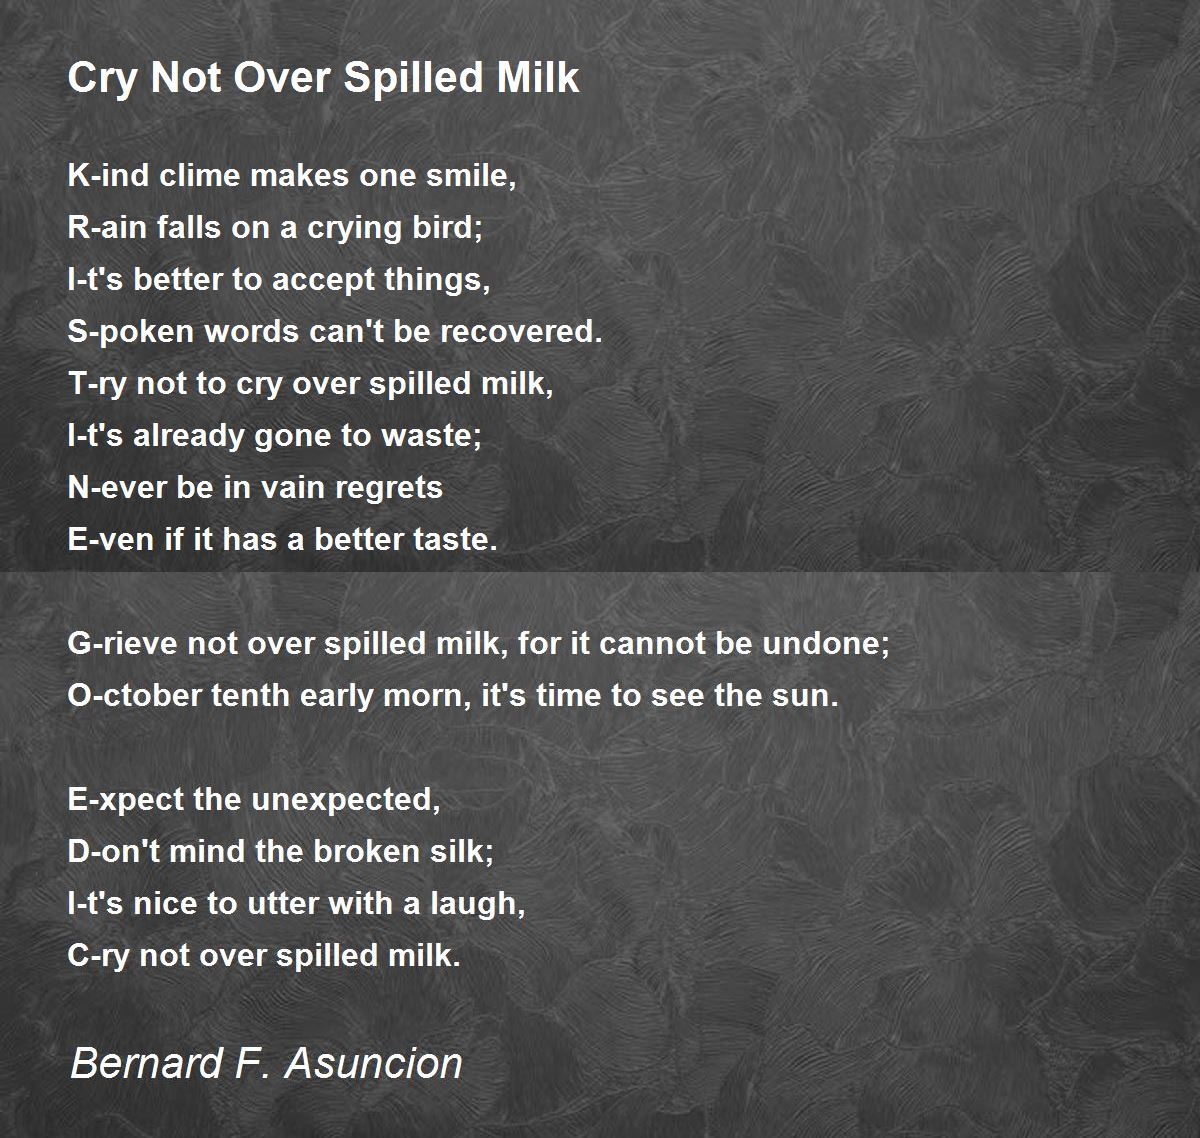 Cry Not Over Spilled Milk - Cry Not Over Spilled Milk Poem by Bernard F.  Asuncion